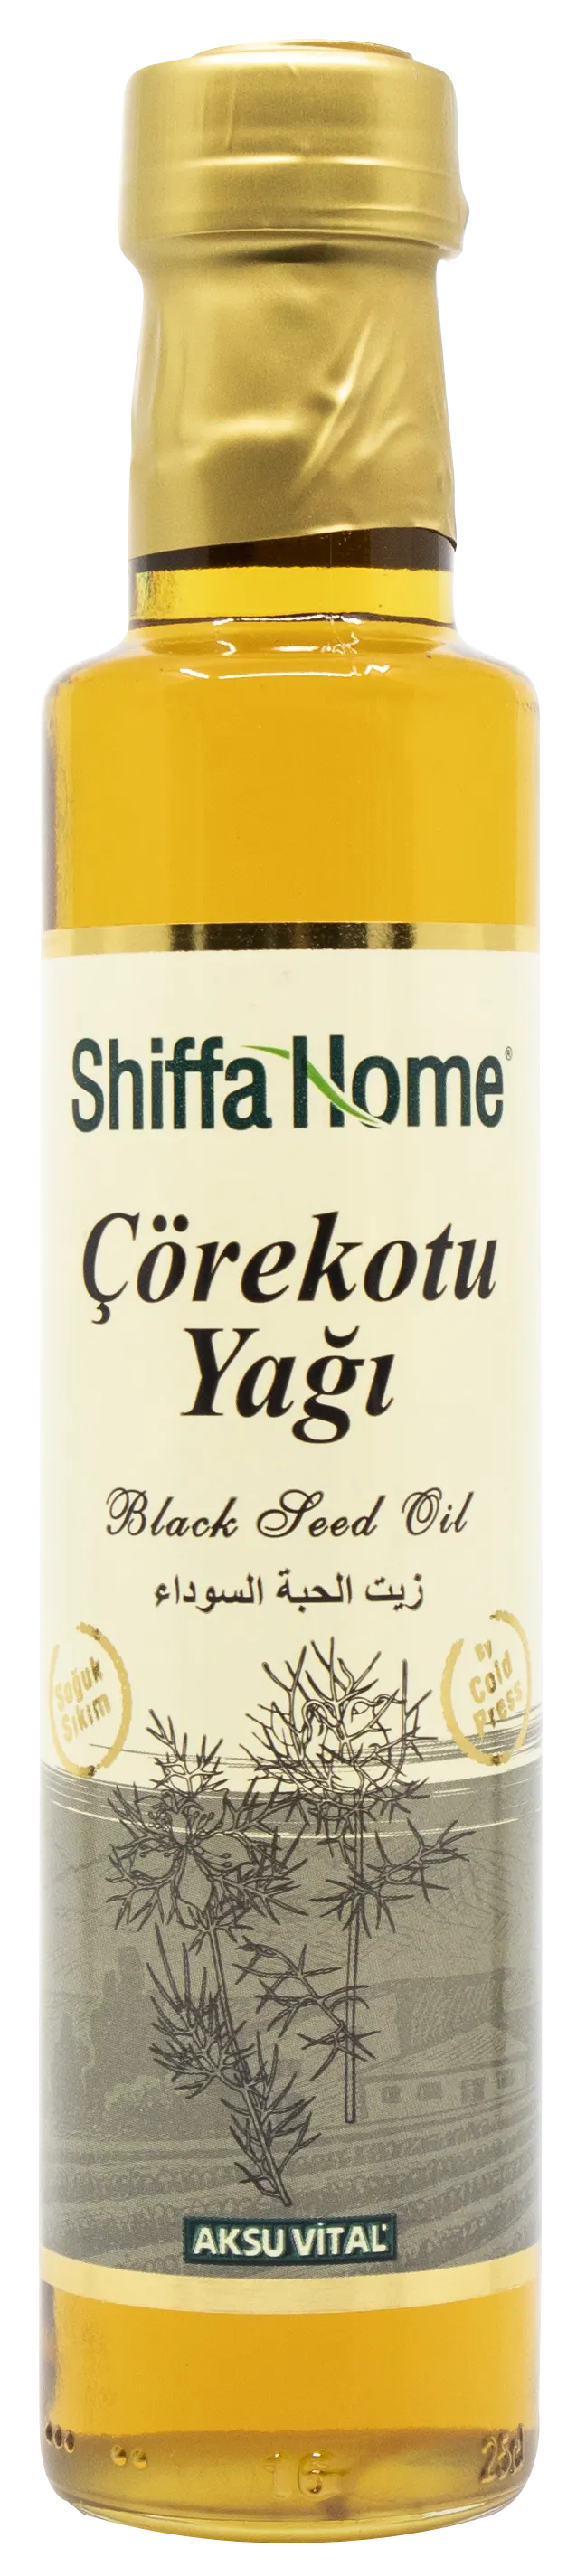 Shiffa Home - Çörekotu Yağı 250 ml.